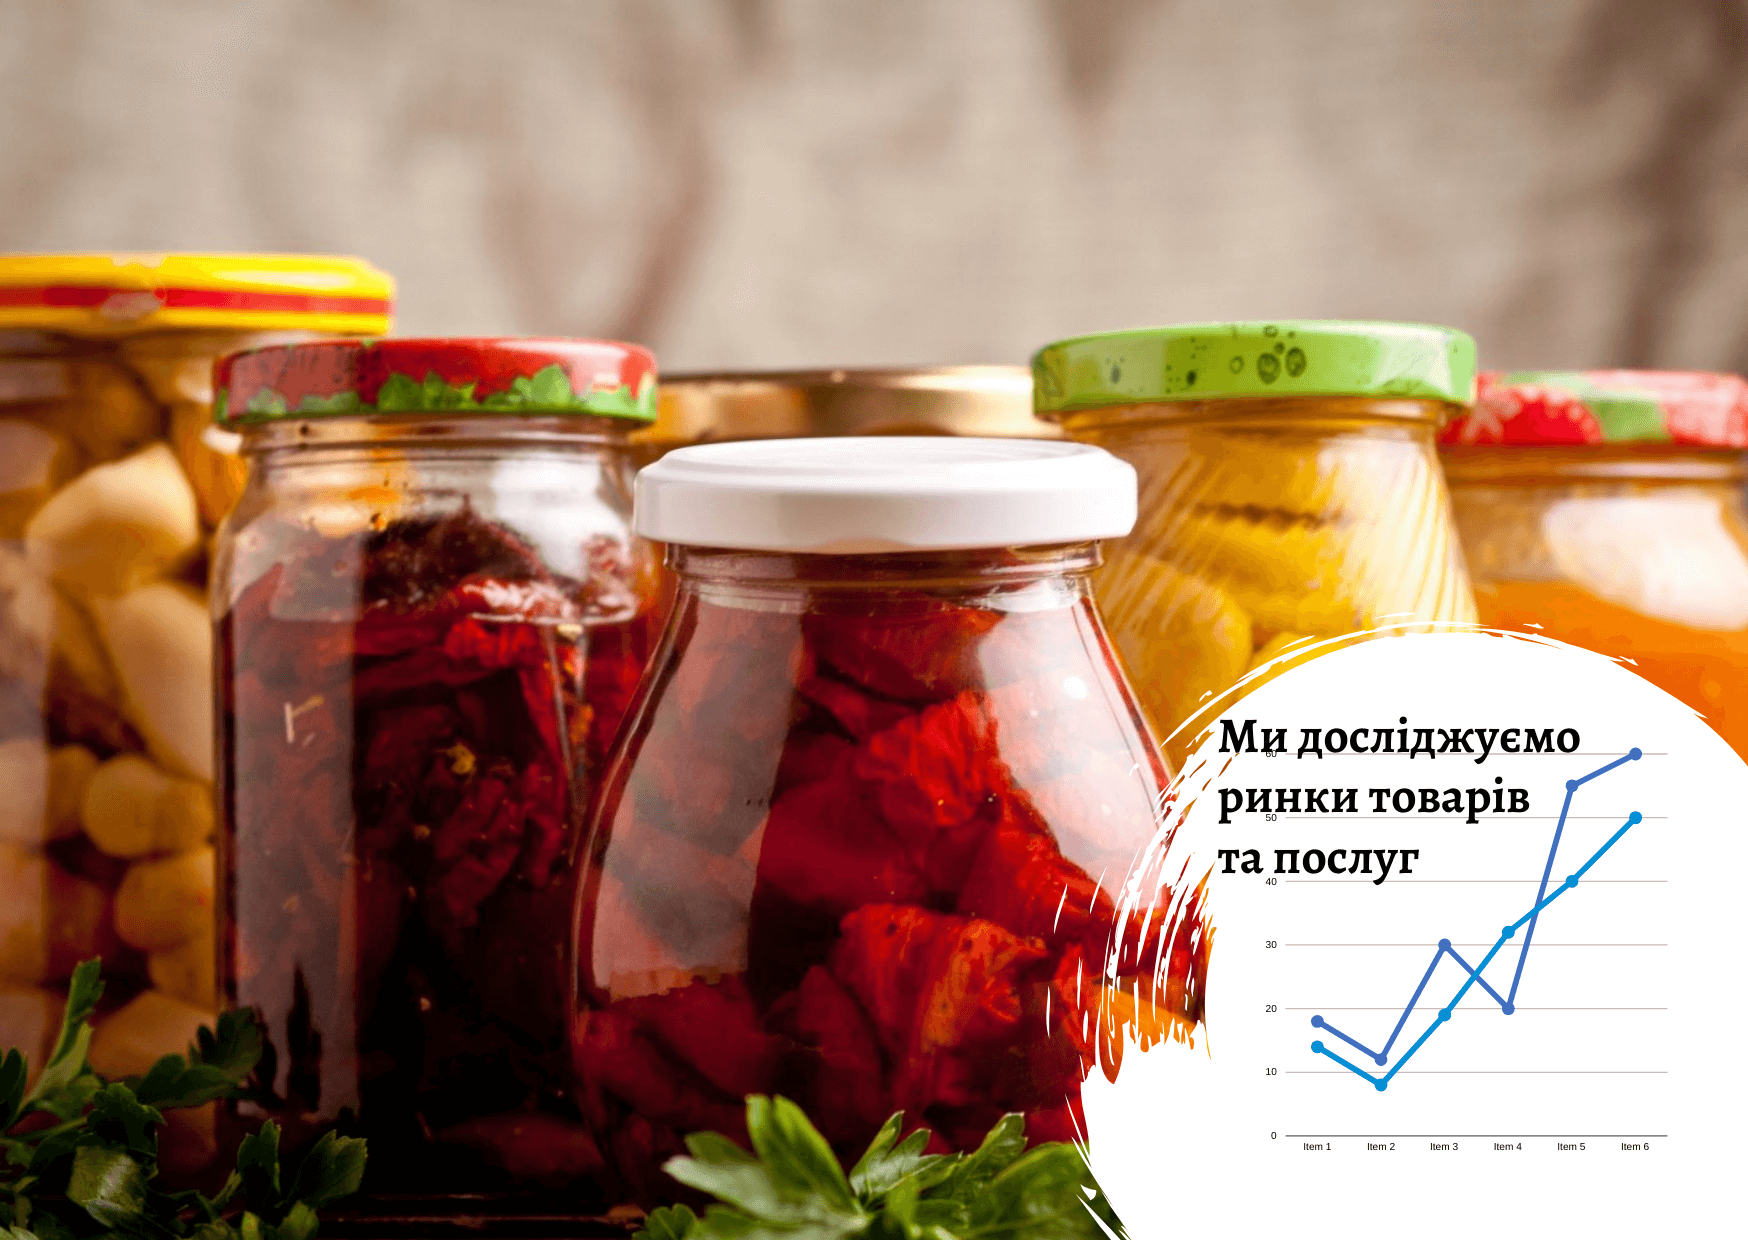 Ukrainian fruit preservation market: comprehensive analysis